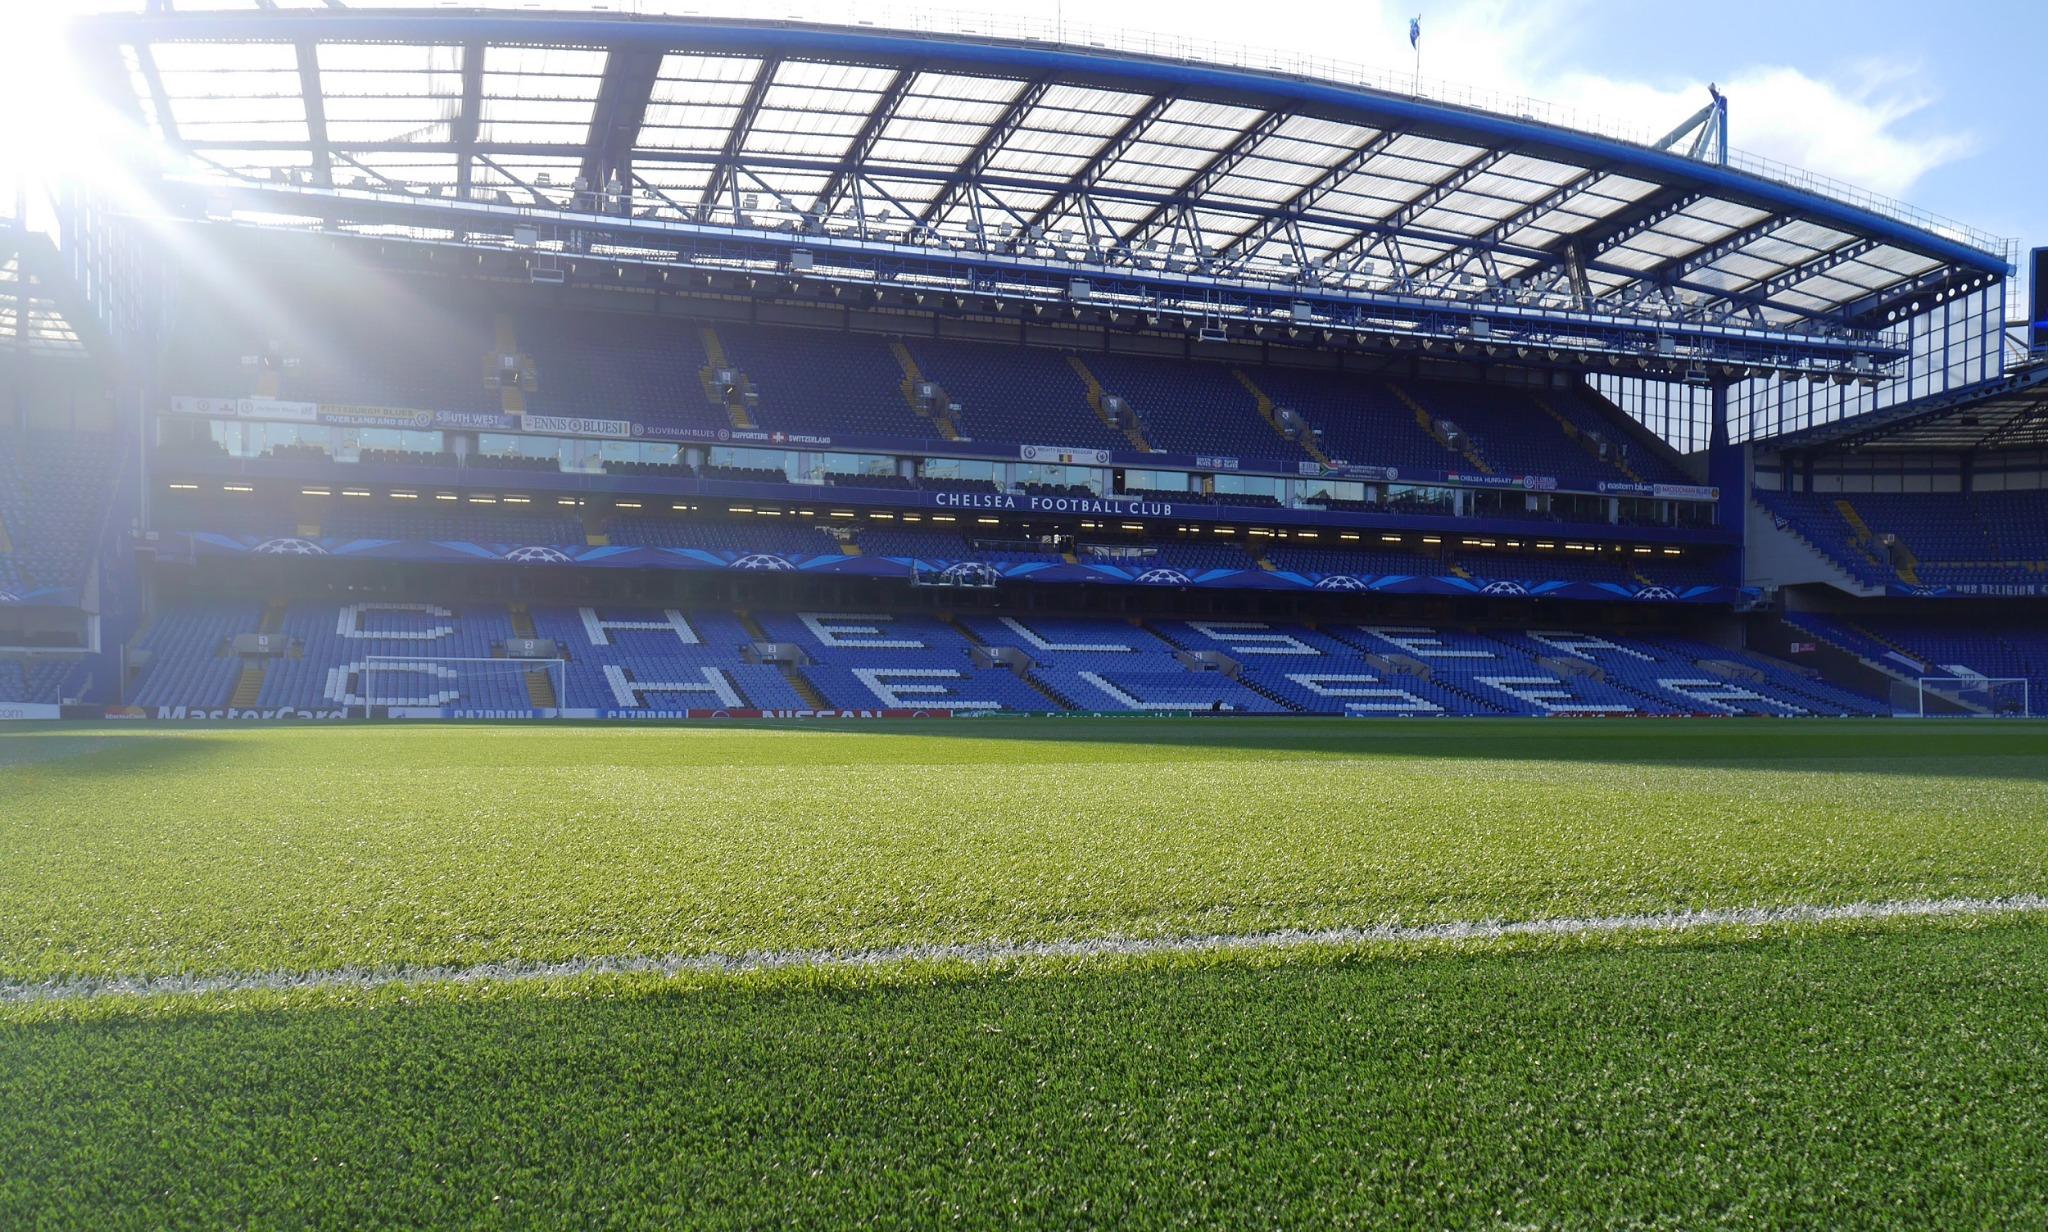 Chelsea FC on X: Here's the scene inside Stamford Bridge. Just